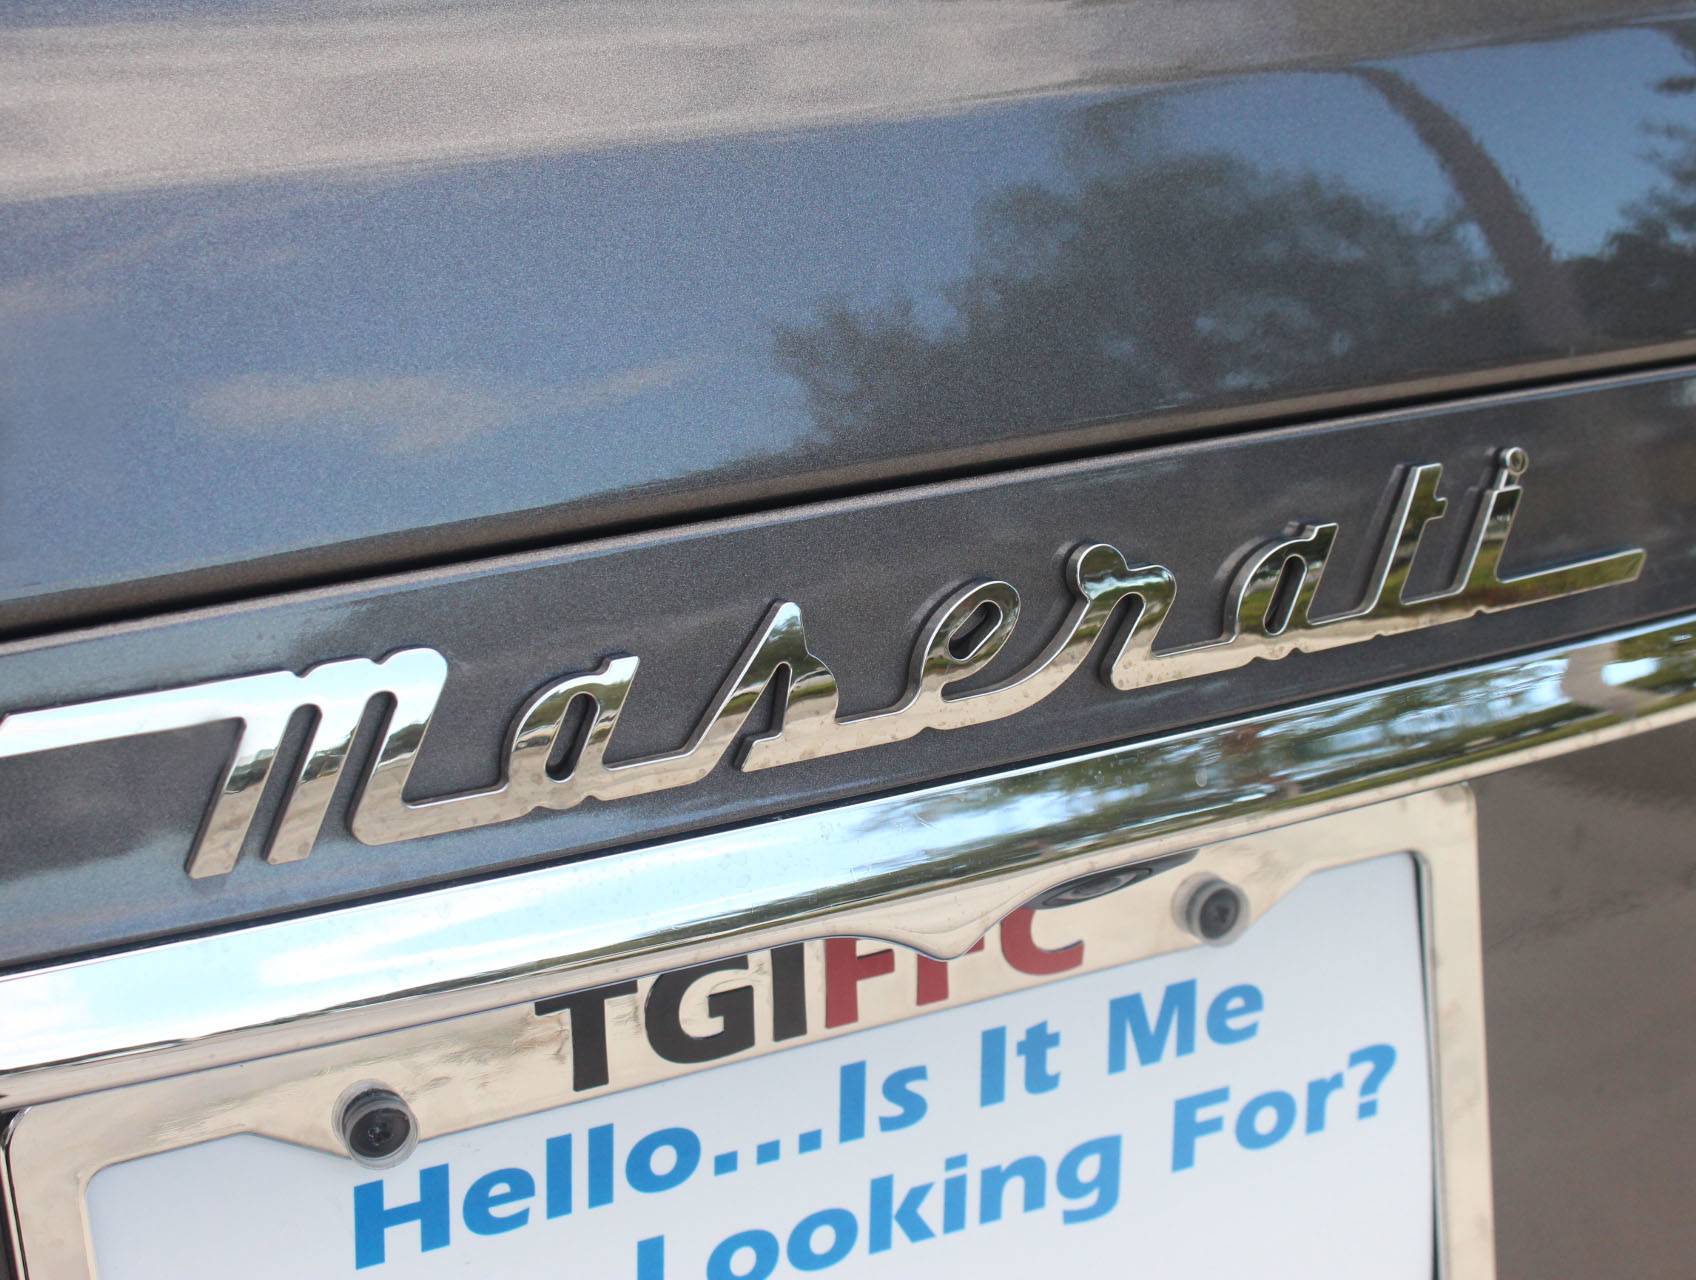 Florida Fine Cars - Used MASERATI GHIBLI 2015 HOLLYWOOD 